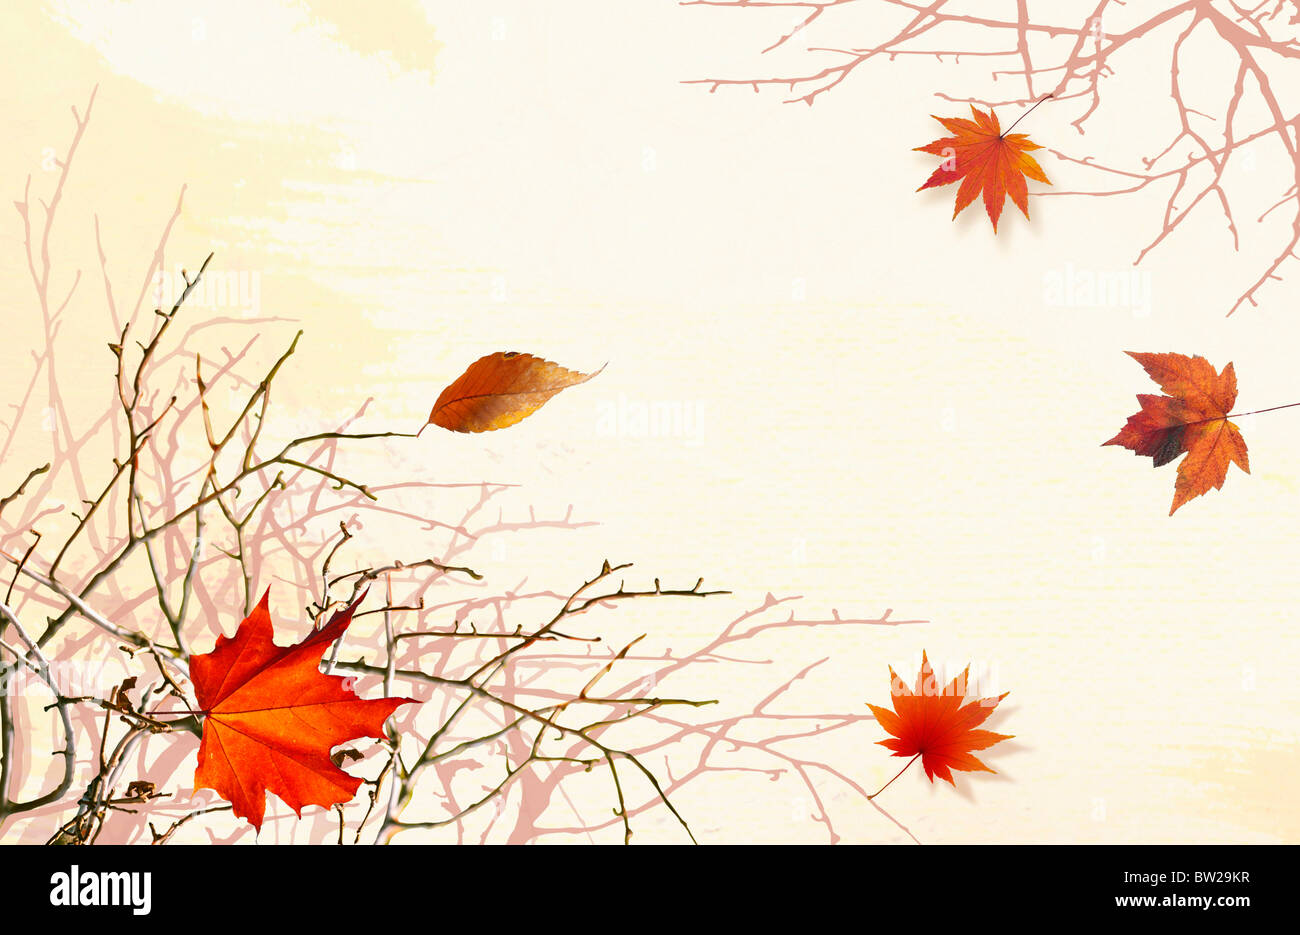 autumn leaves in illustration Stock Photo